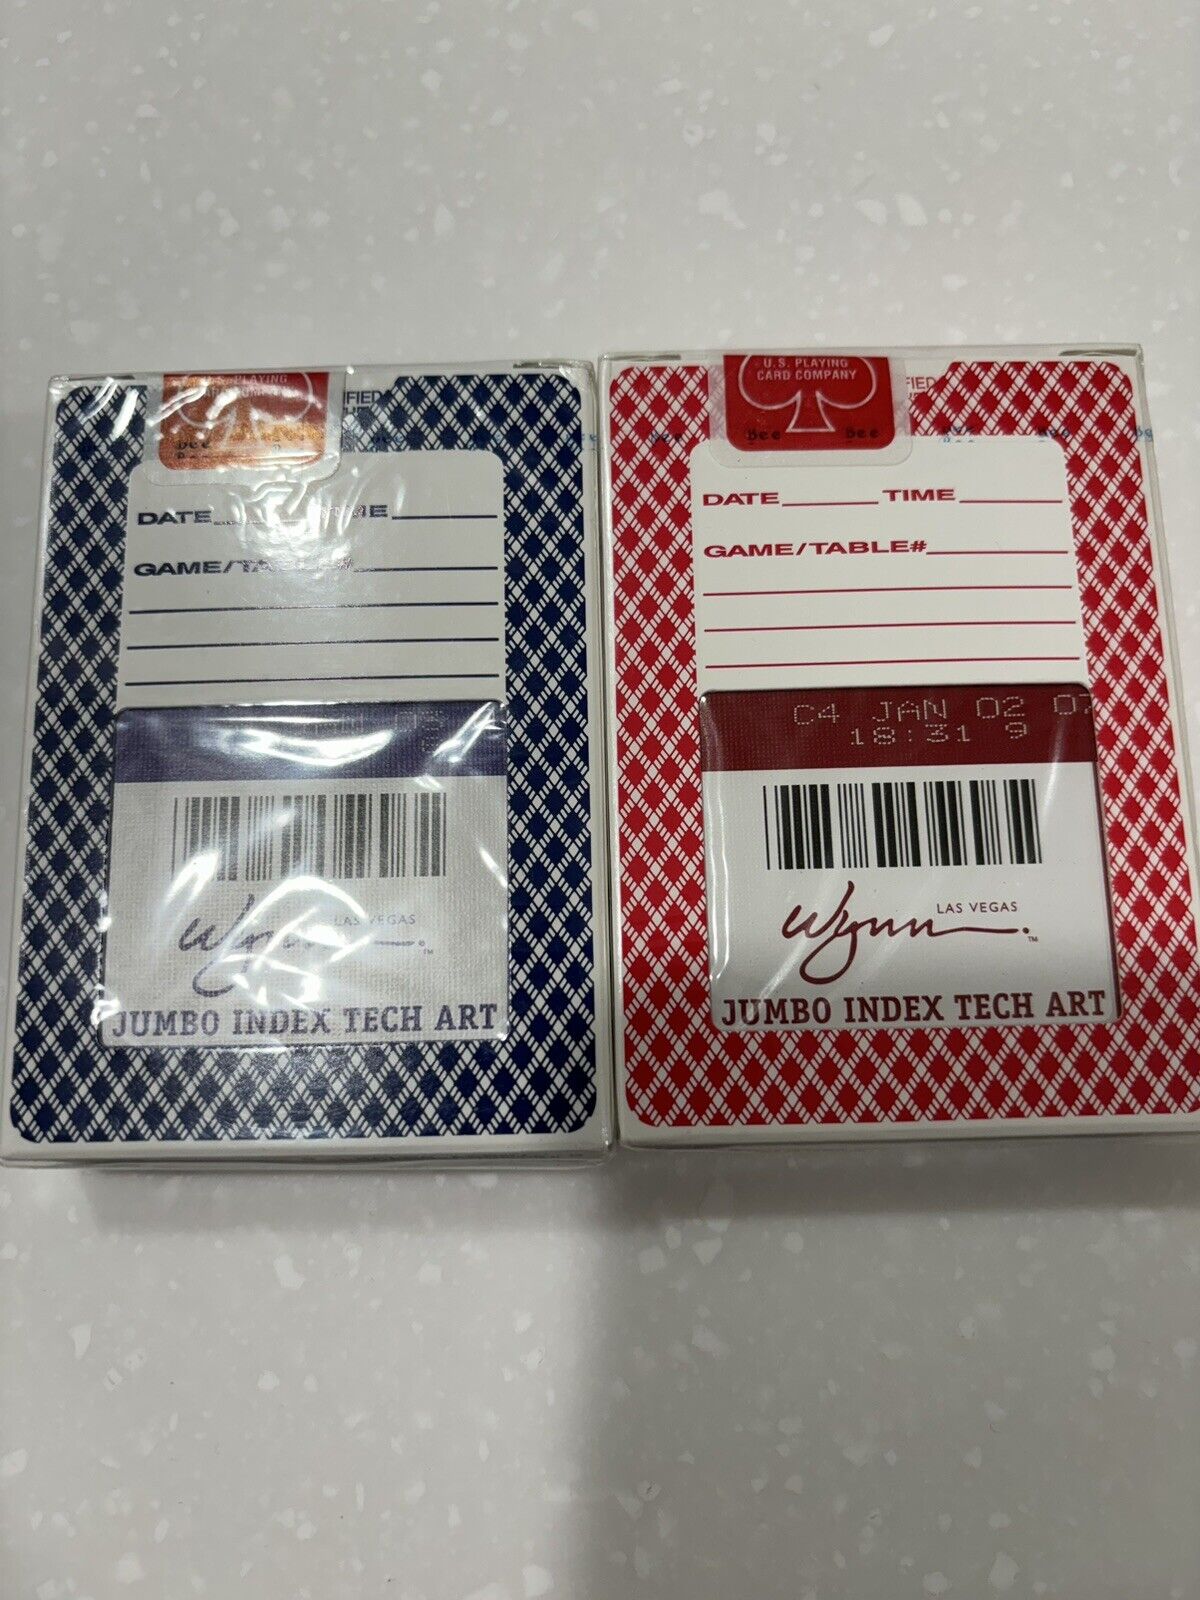 WYNN LAS VEGAS NEVADA CASINO CARDS (2 Deck Set) Blue & Red Sealed 